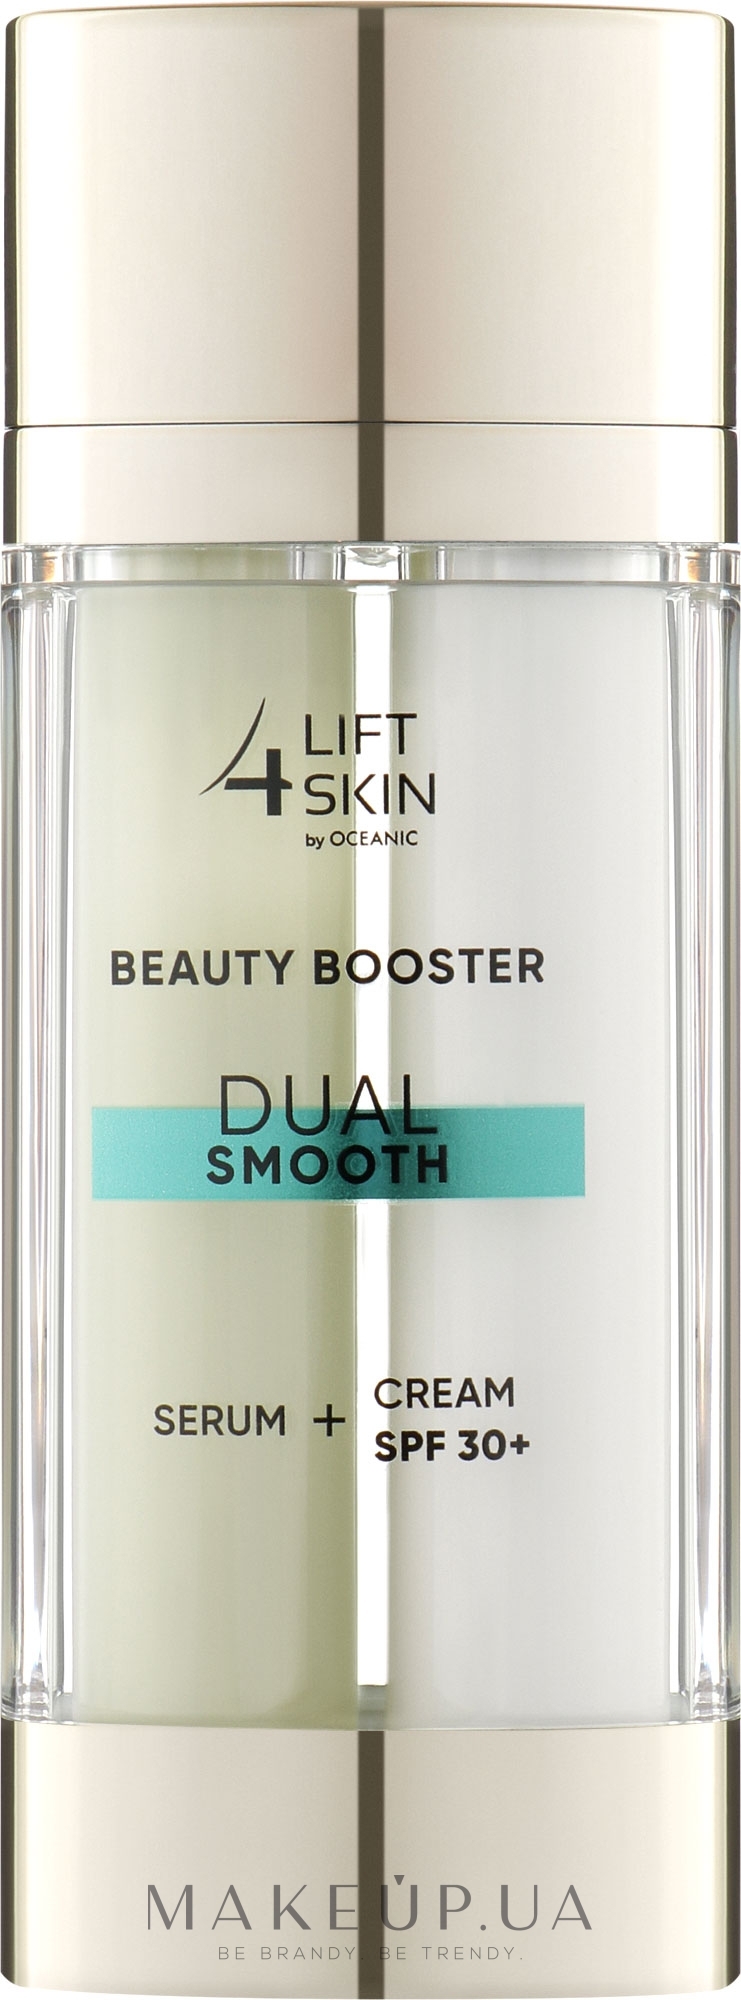 Сыворотка с ниацинамидом + крем с SPF 30+ 2 в 1 - Lift 4 Skin Beauty Booster Dual Smooth 10% Niacynamid Serum + Cream SPF30+ — фото 2x15ml